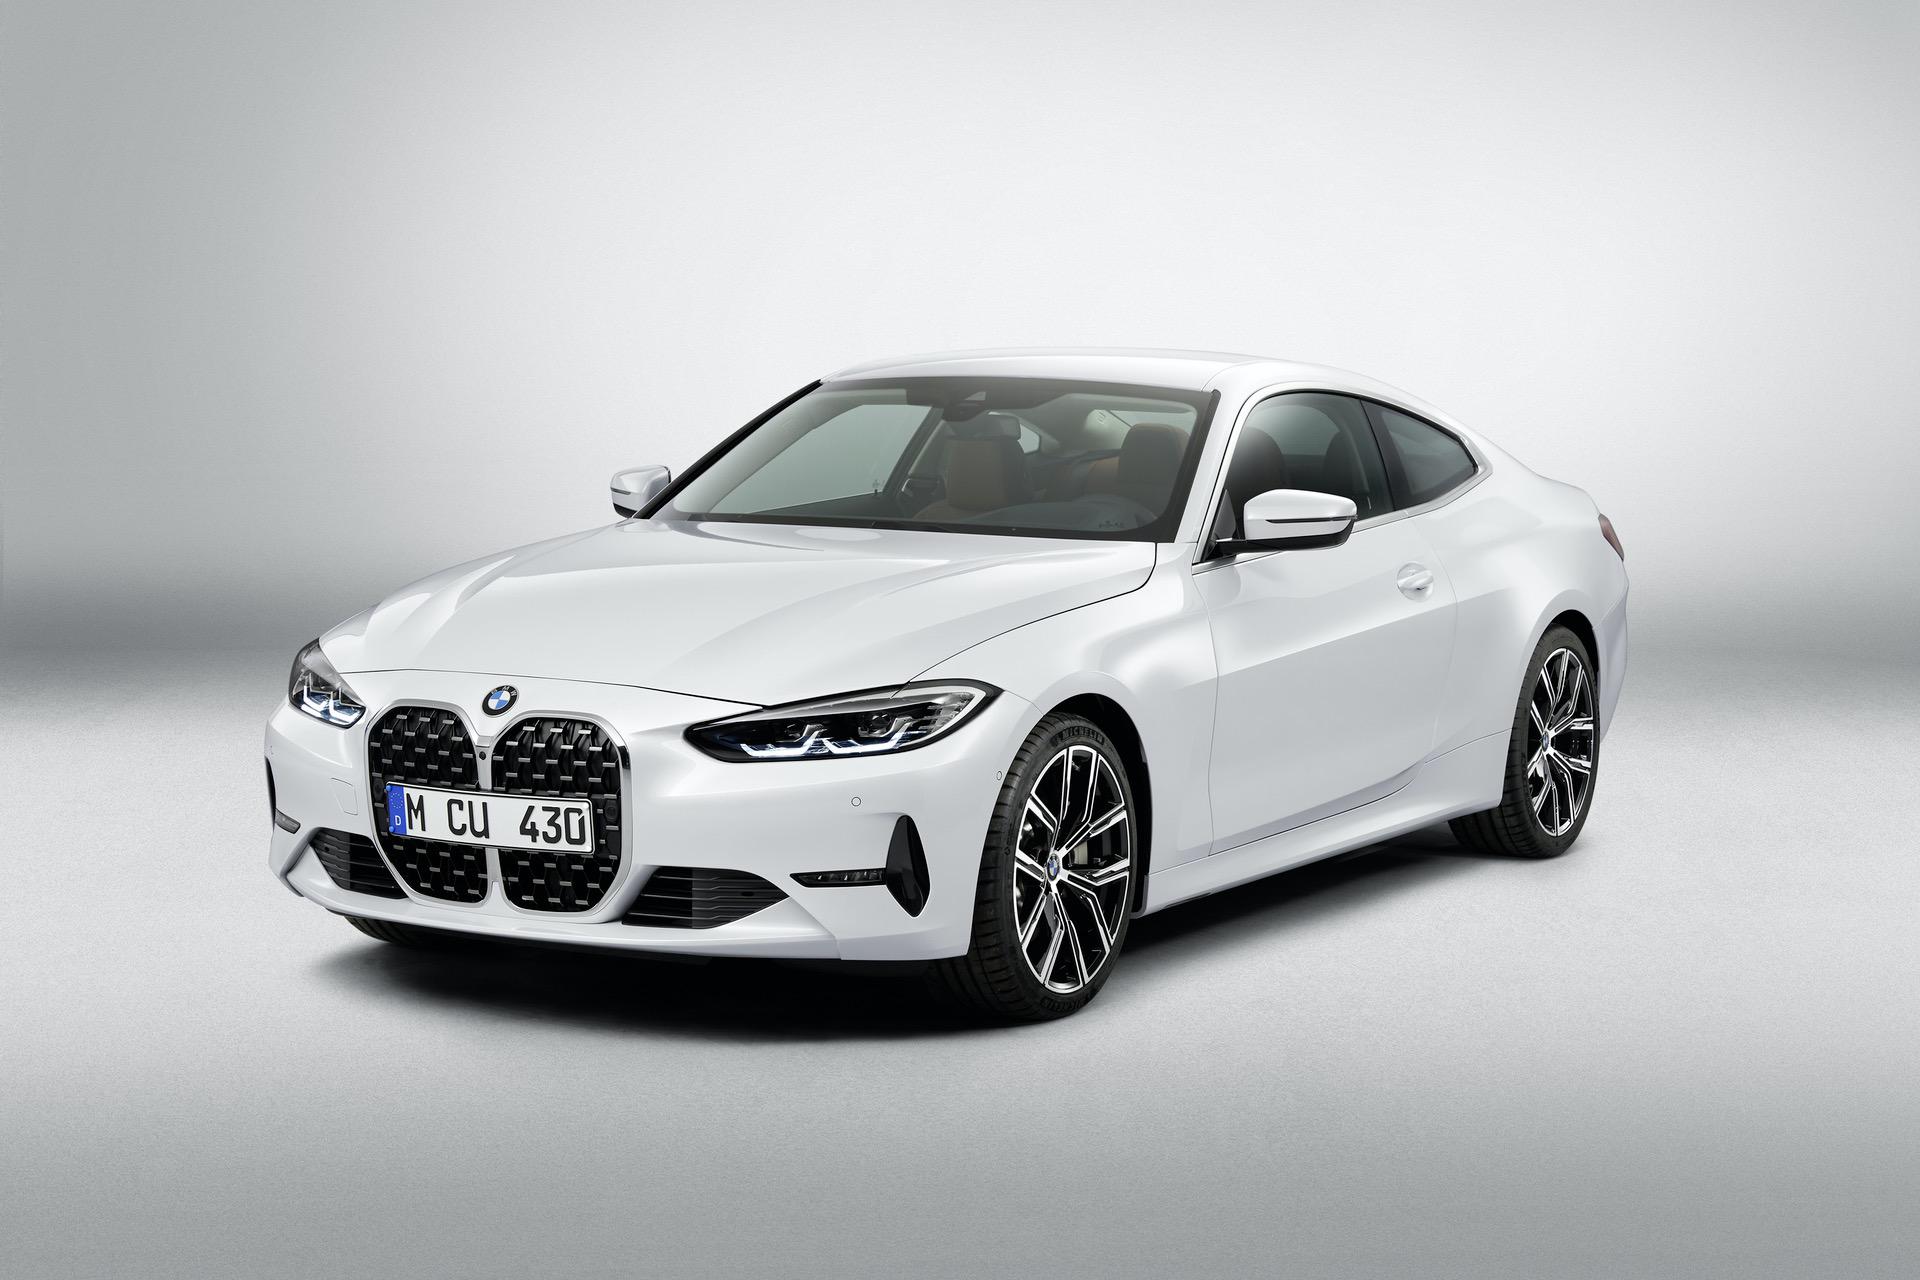 2021 BMW 4 Series: No manual transmission and no plug-in hybrid